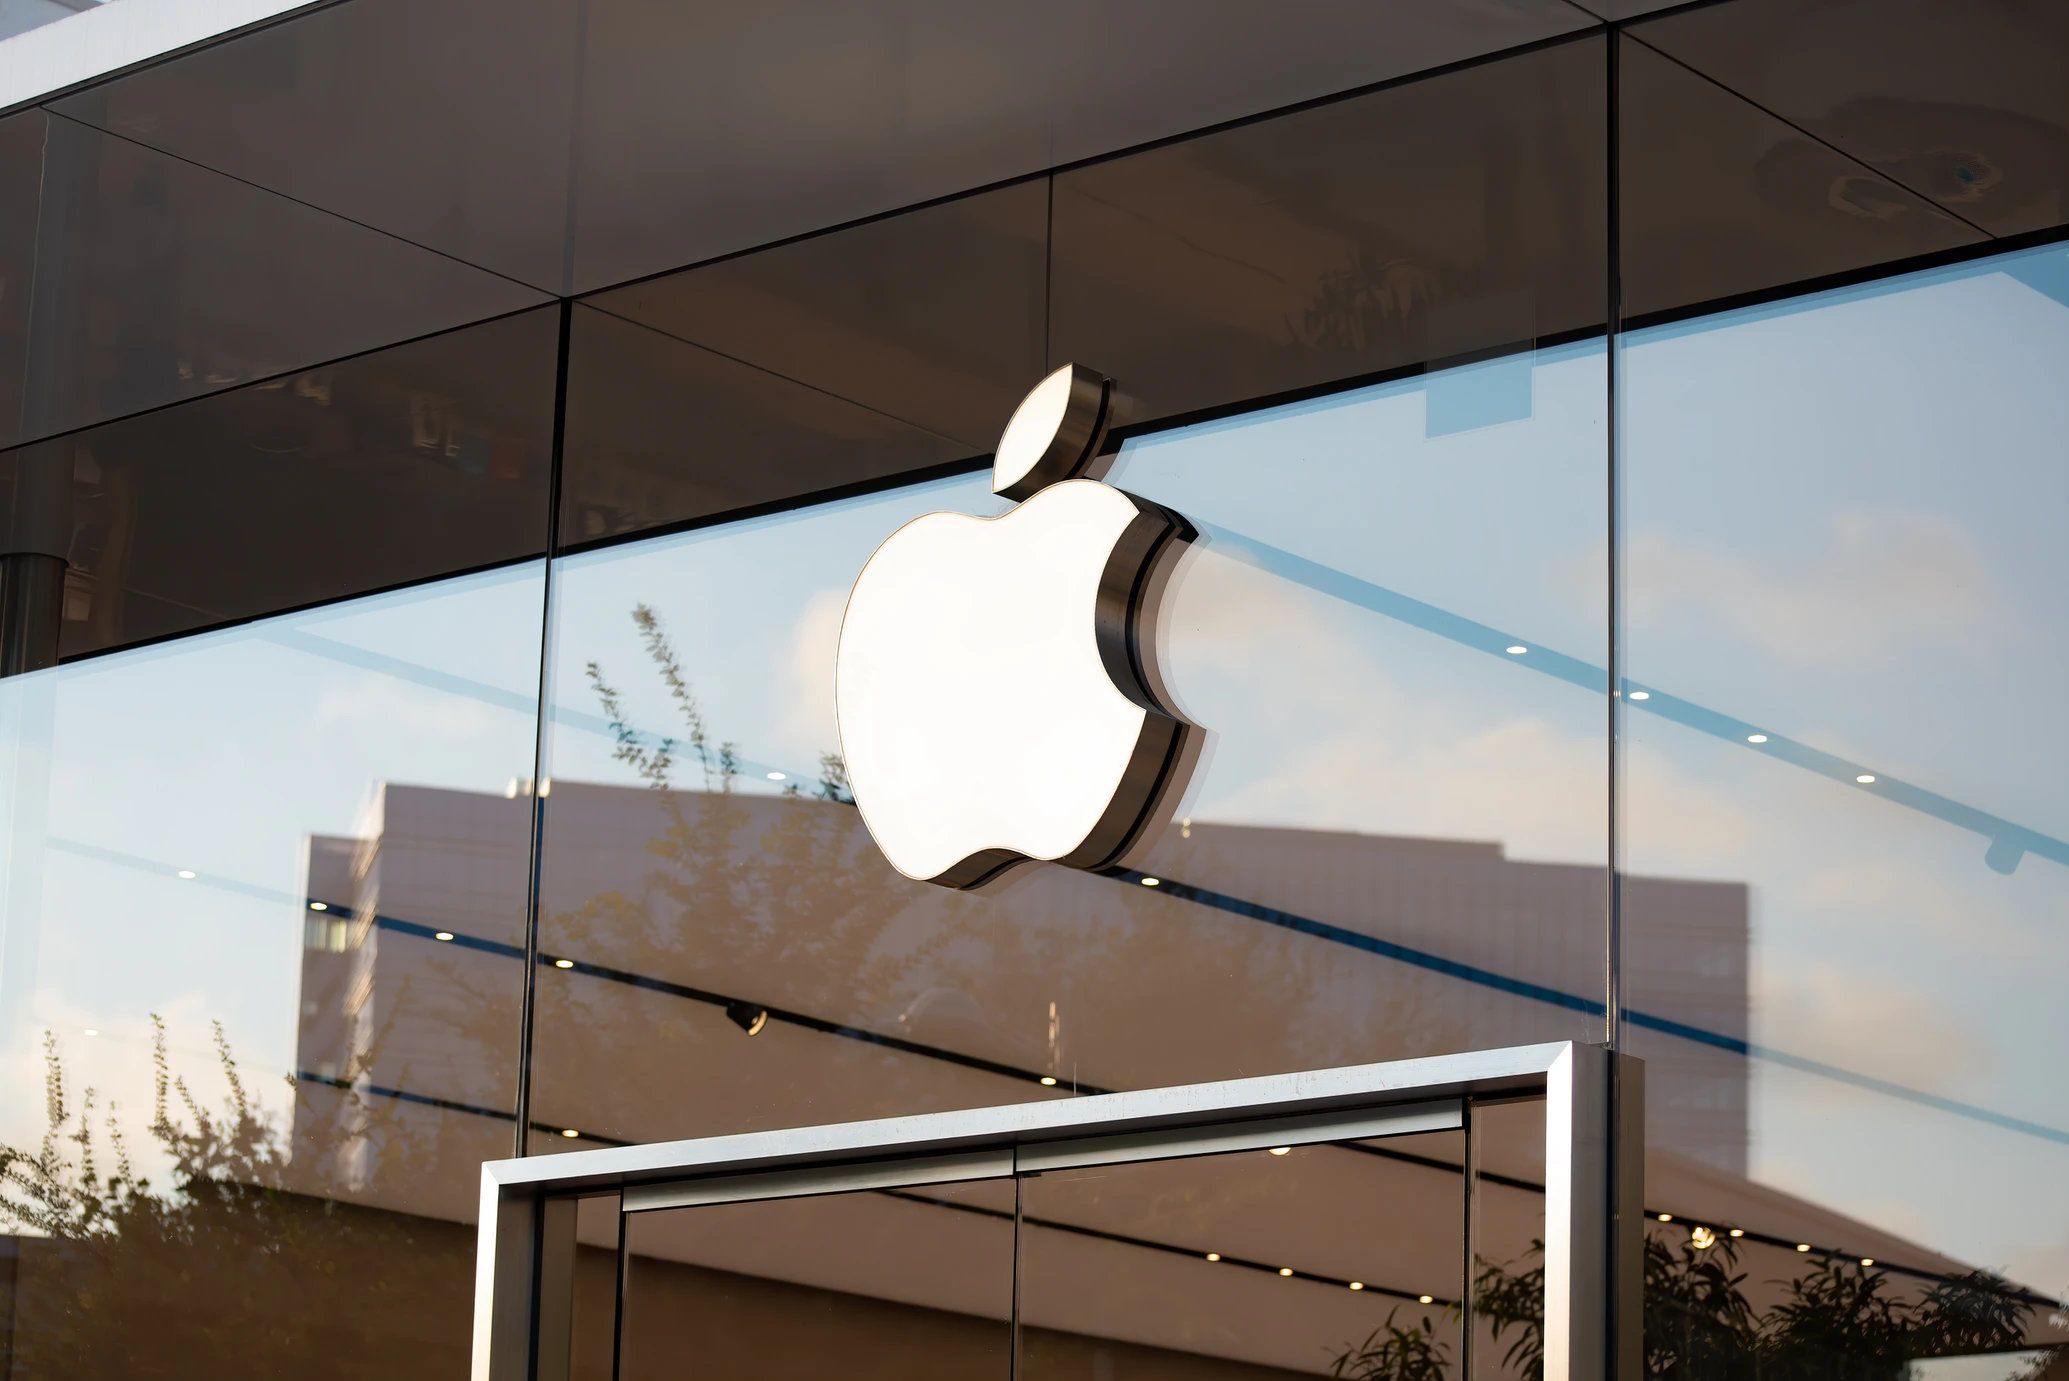 Apple-ը դադարեցրել է իր արտադանքների վաճառքը Թուրքիայում լիրայի արժեզրկման  պատճառով